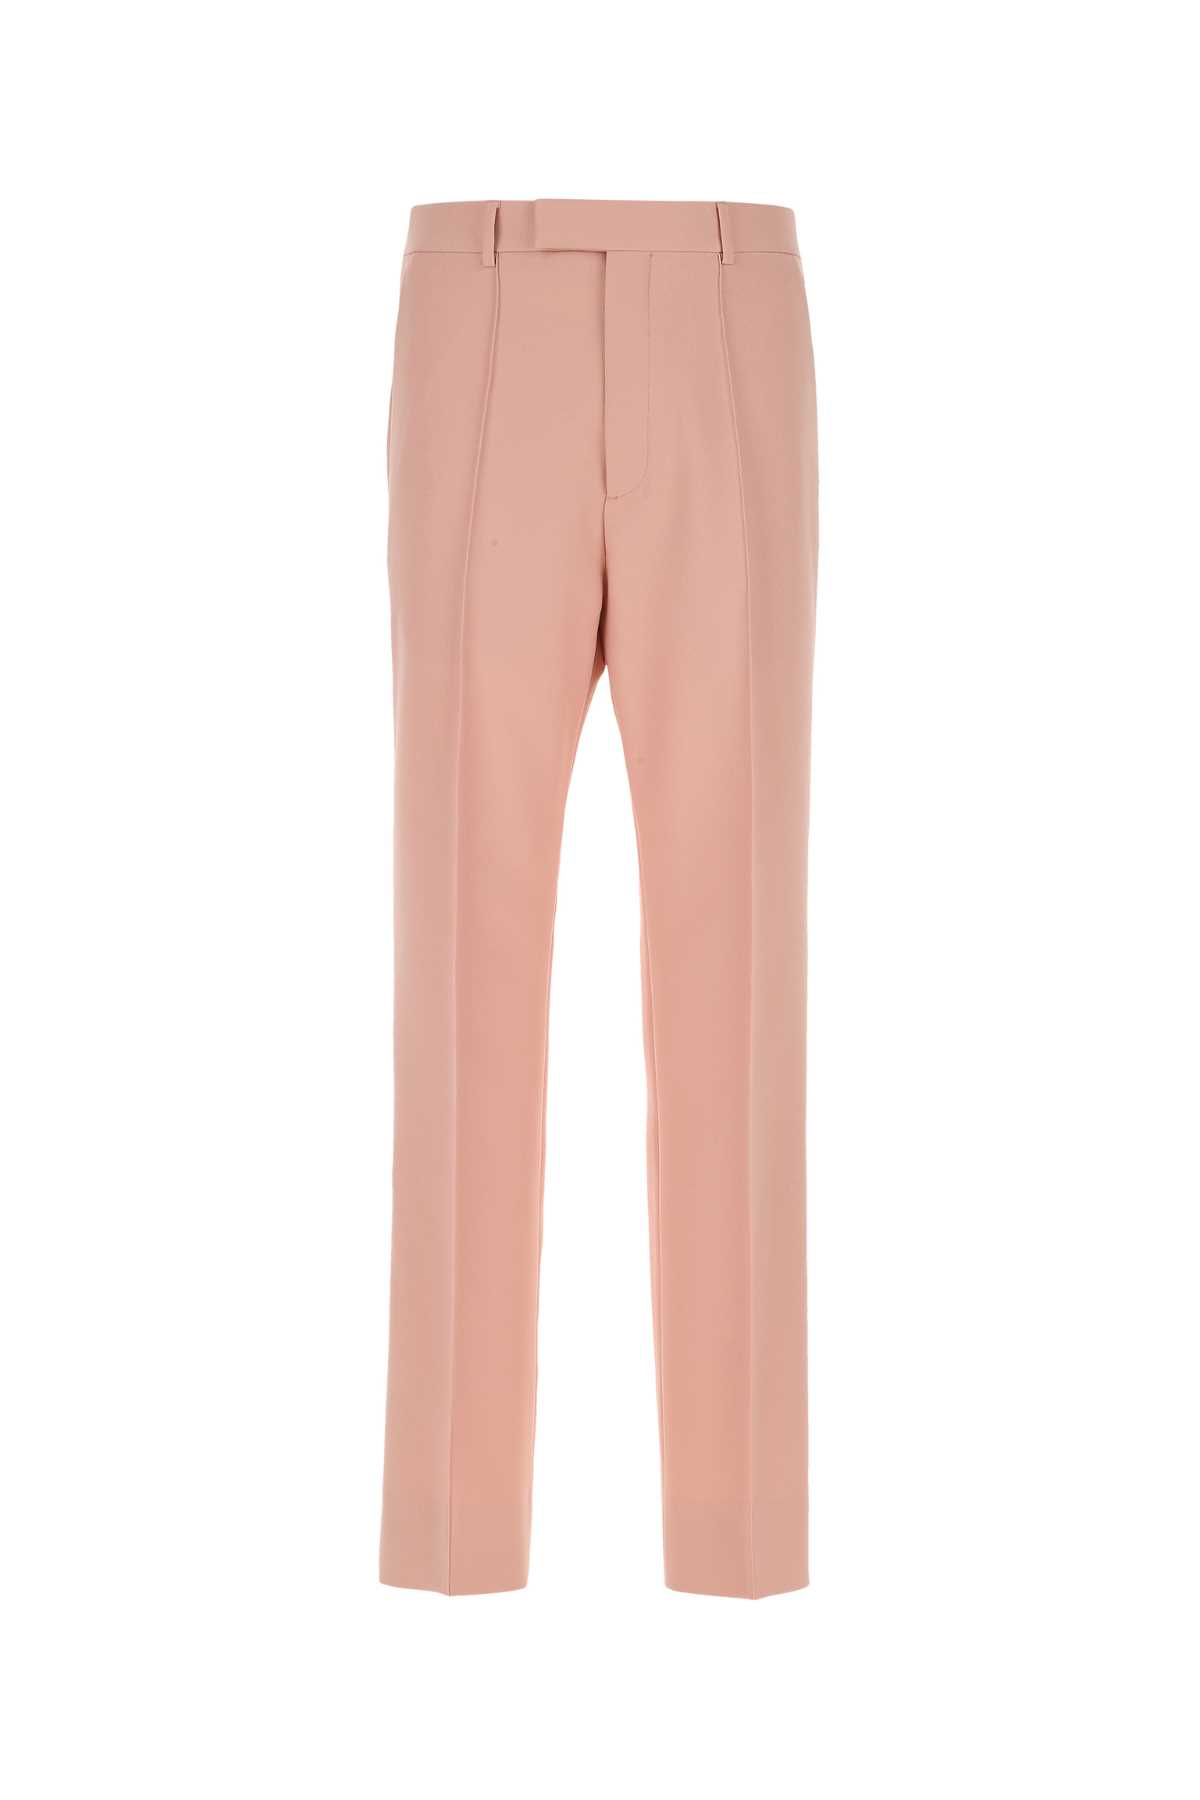 Gucci Pastel Pink Polyester Pant